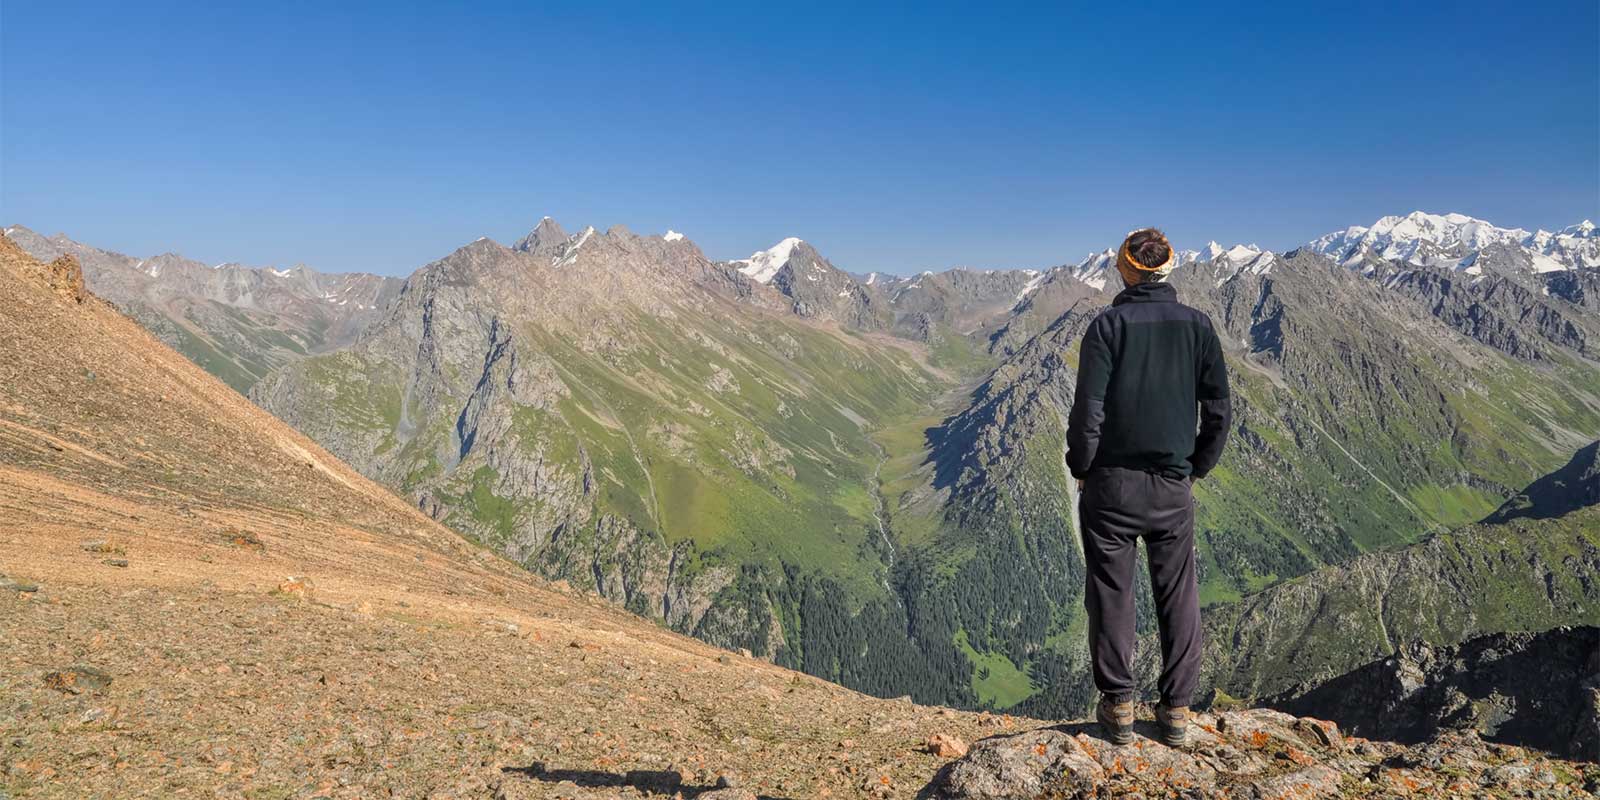 Trekker admiring the view in Tien Shan Mountains, Kyrgyzstan